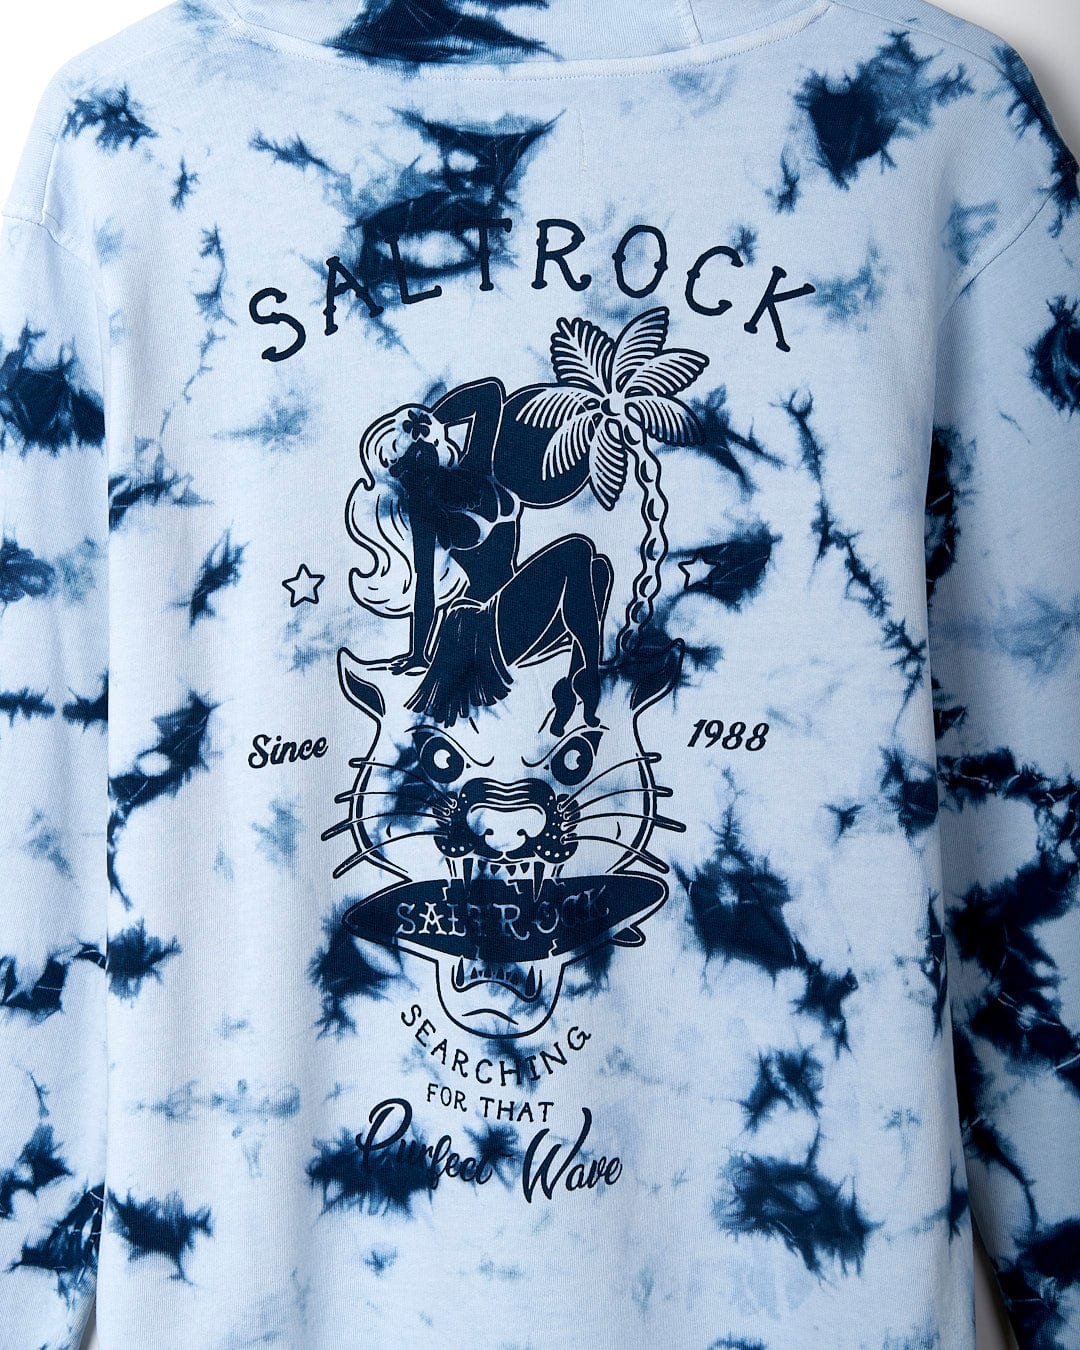 The back of a Purfect Wave - Mens Tie Dye Pop Hoodie - Light Blue sweatshirt with a palm tree on it by Saltrock.